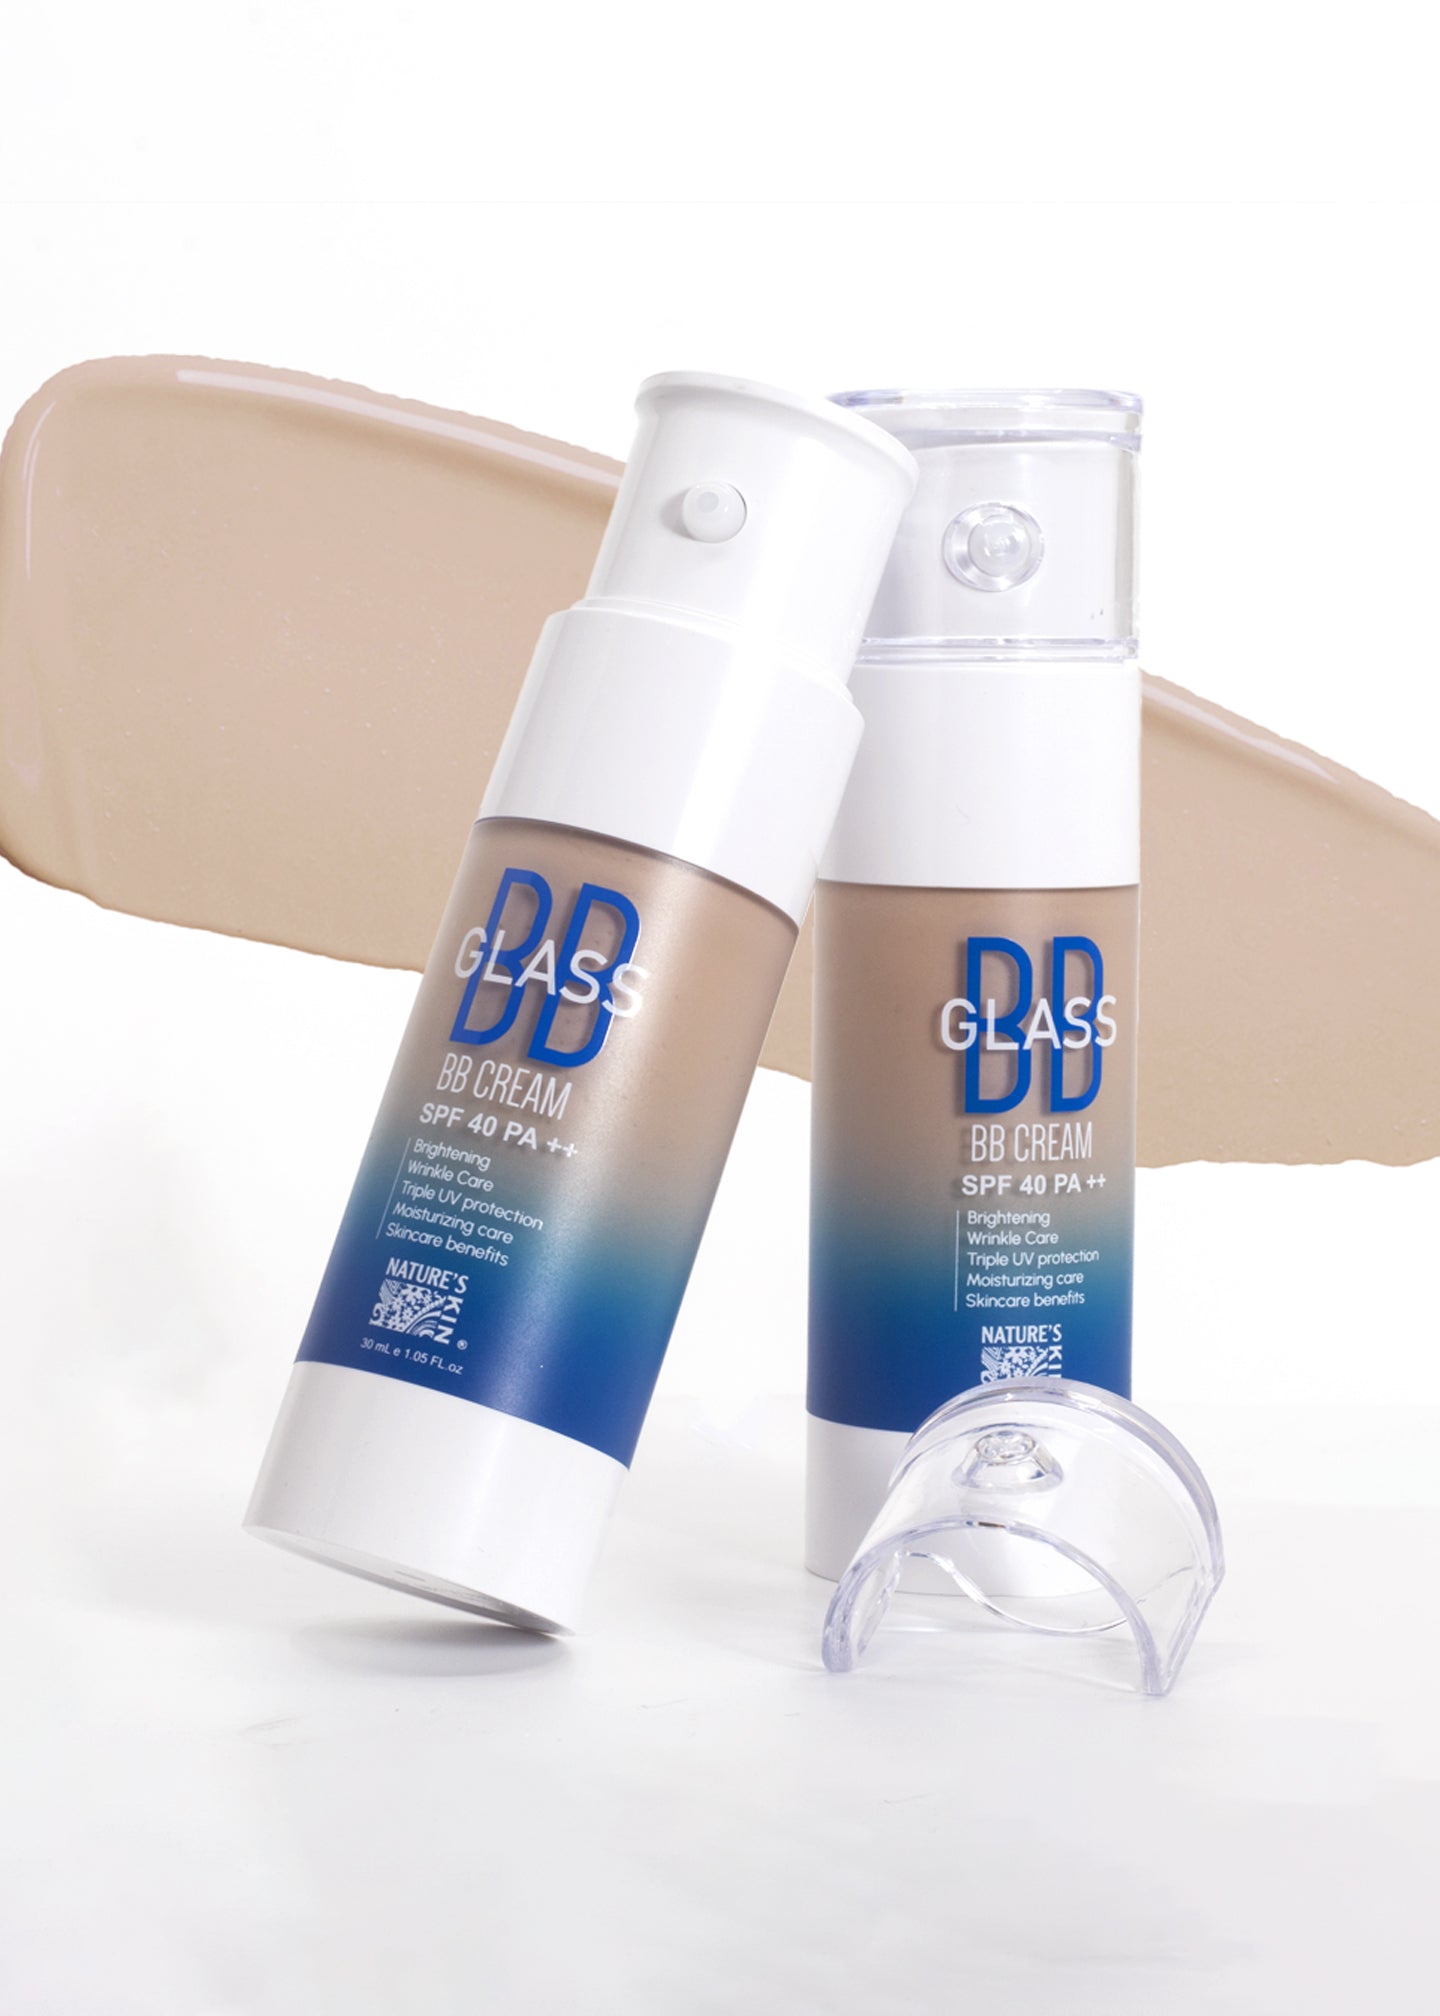 BB Glass BB Cream- Natural Skincare